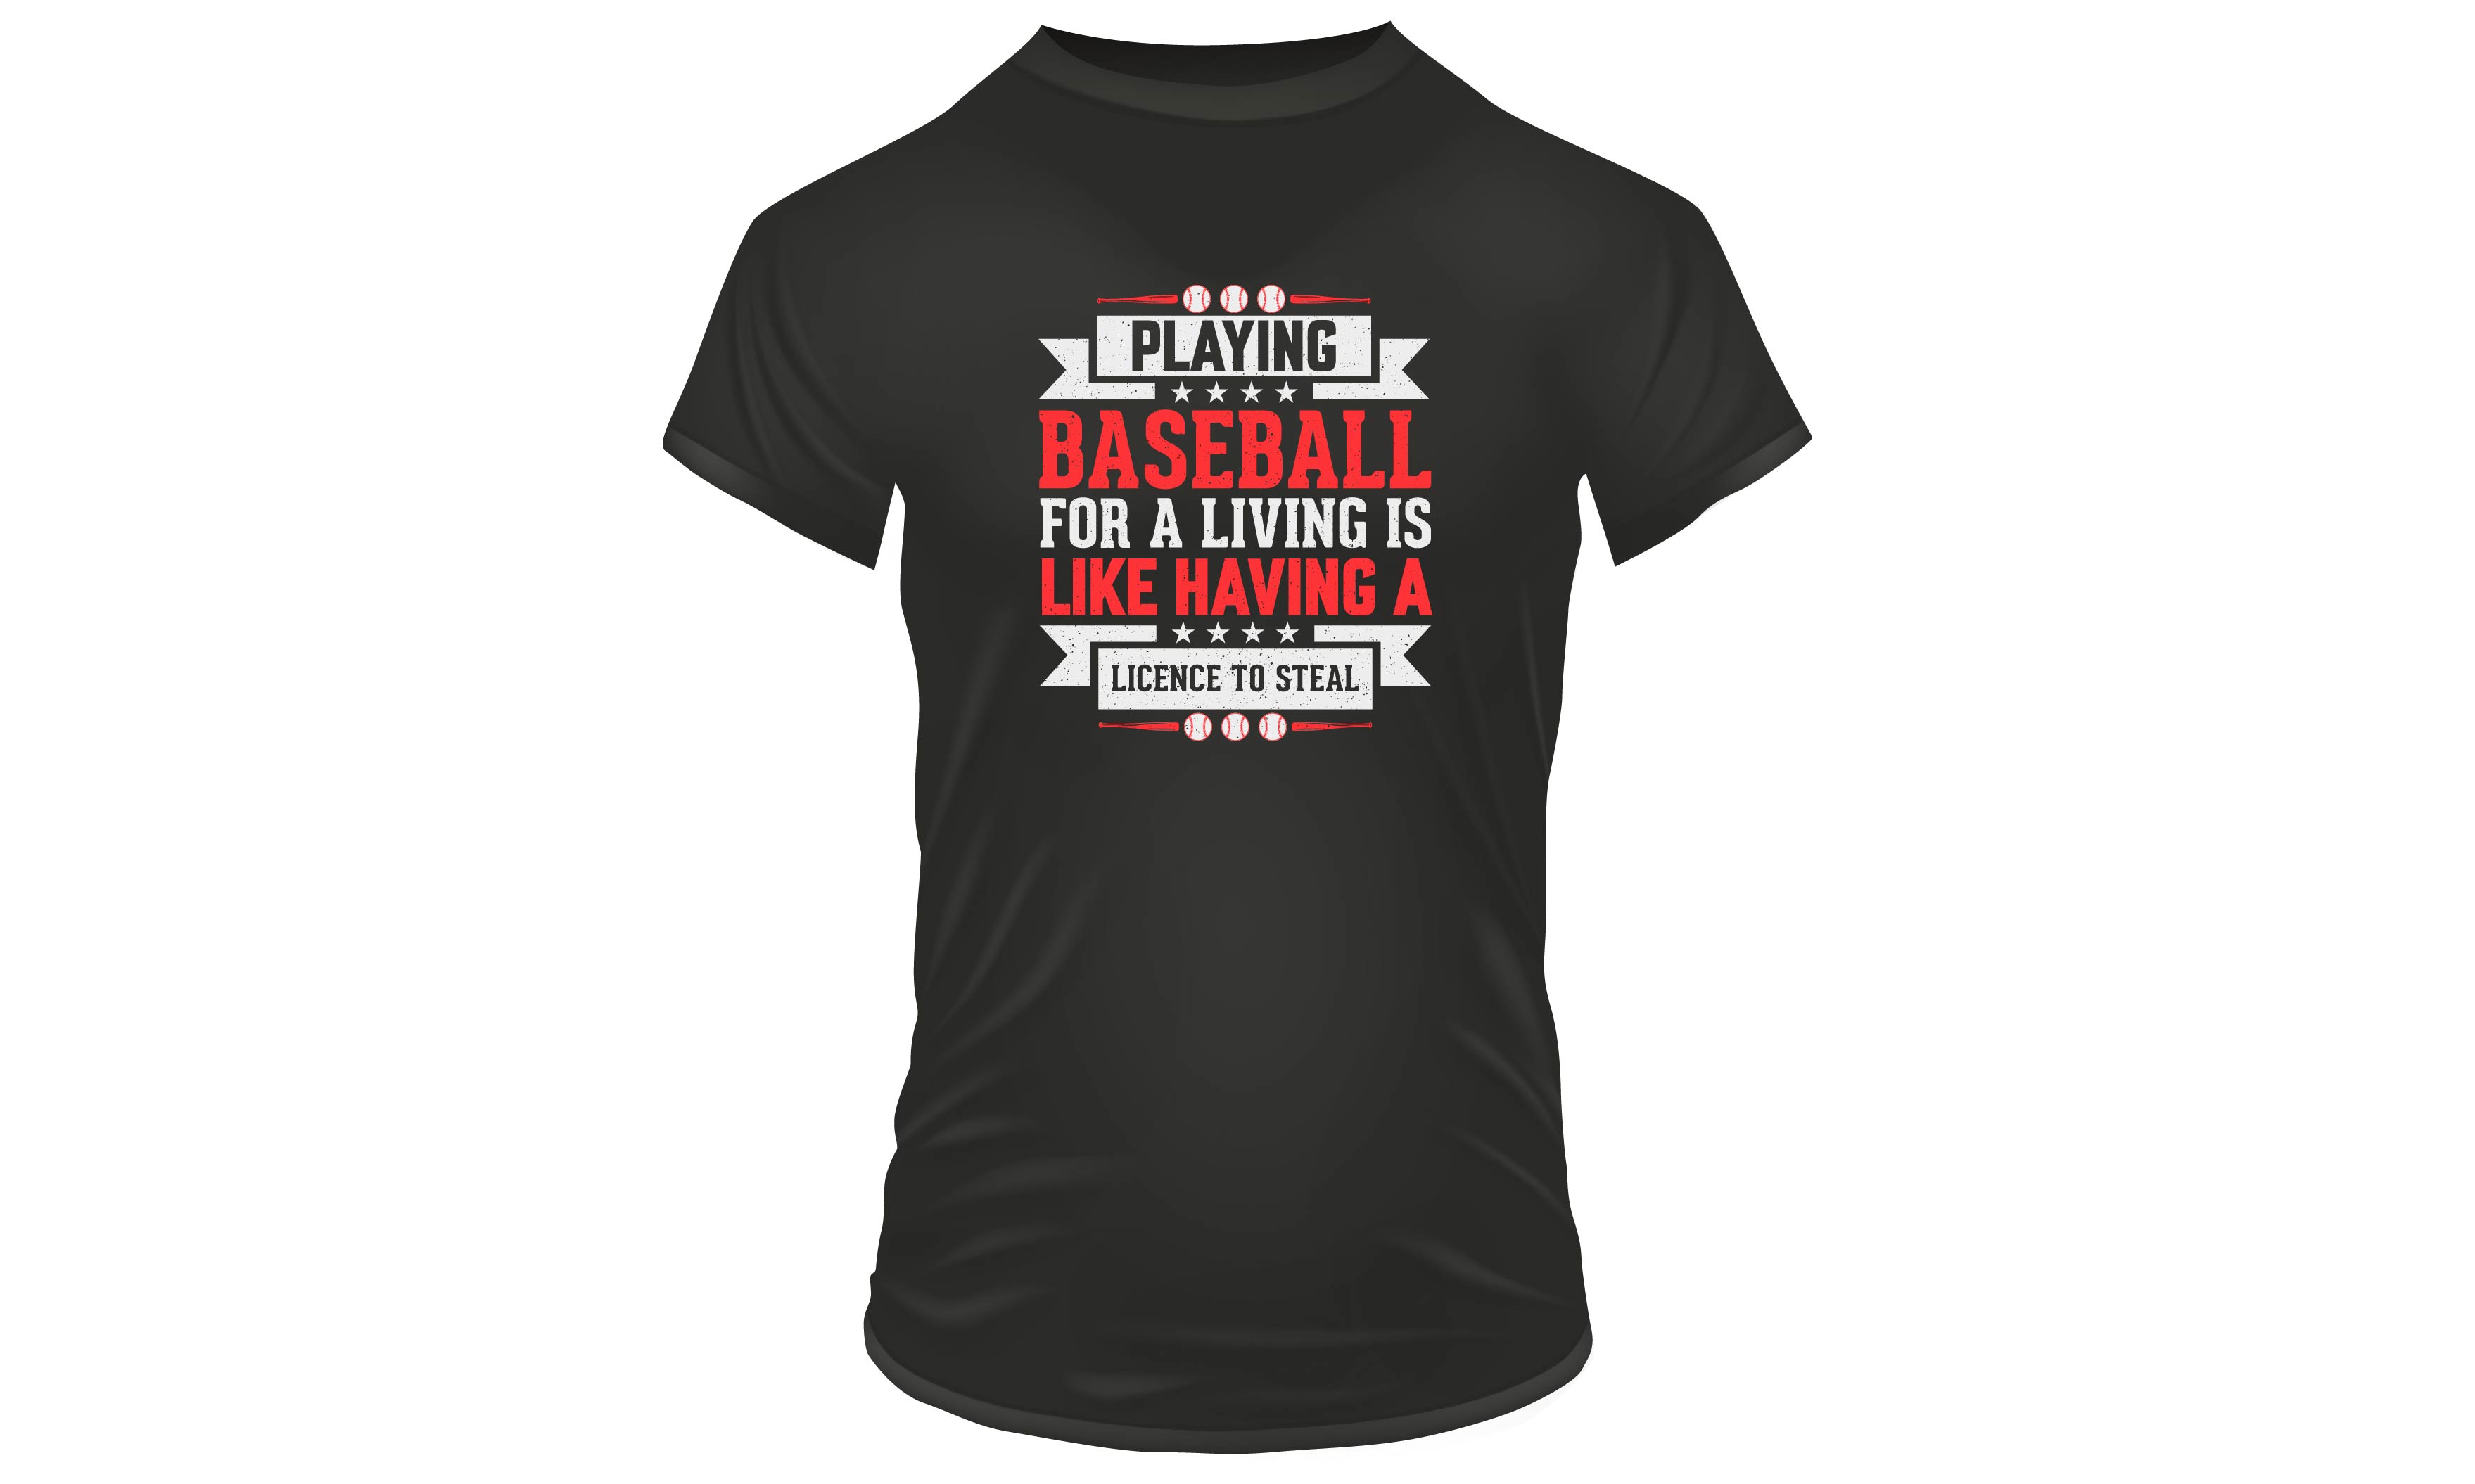 T - shirt that says playing baseball for a living is like having a baseball.